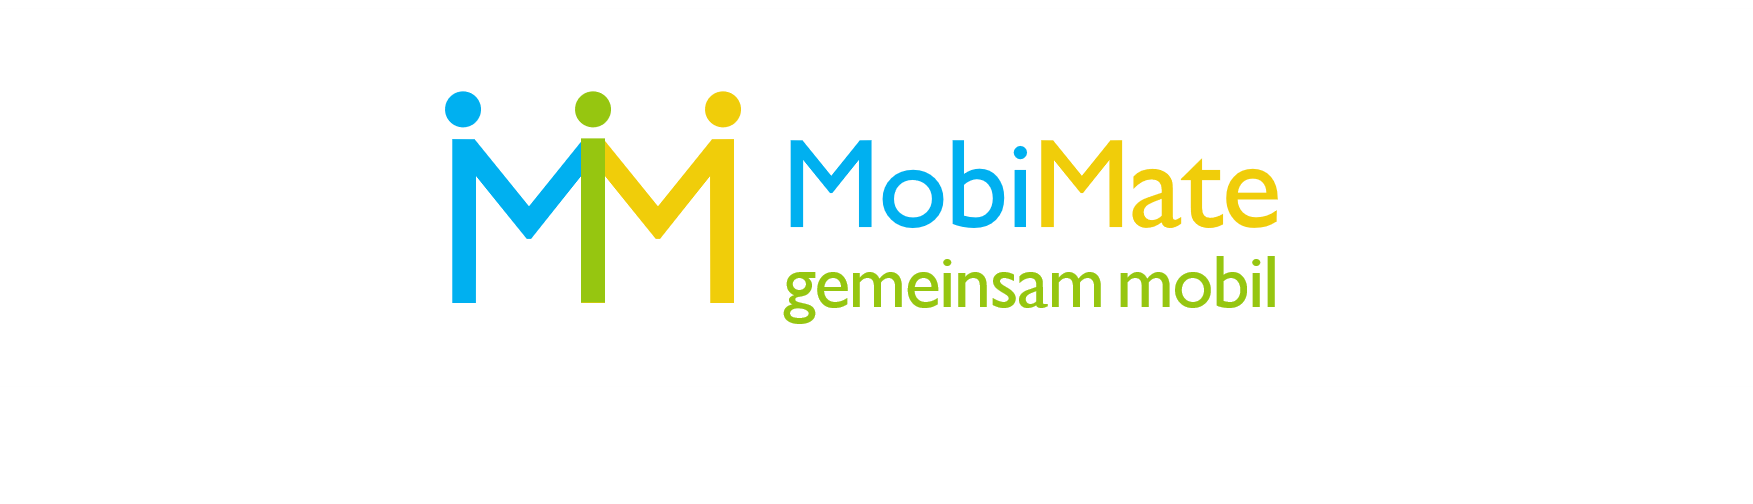 MobiMate-logo-de-lg.png
